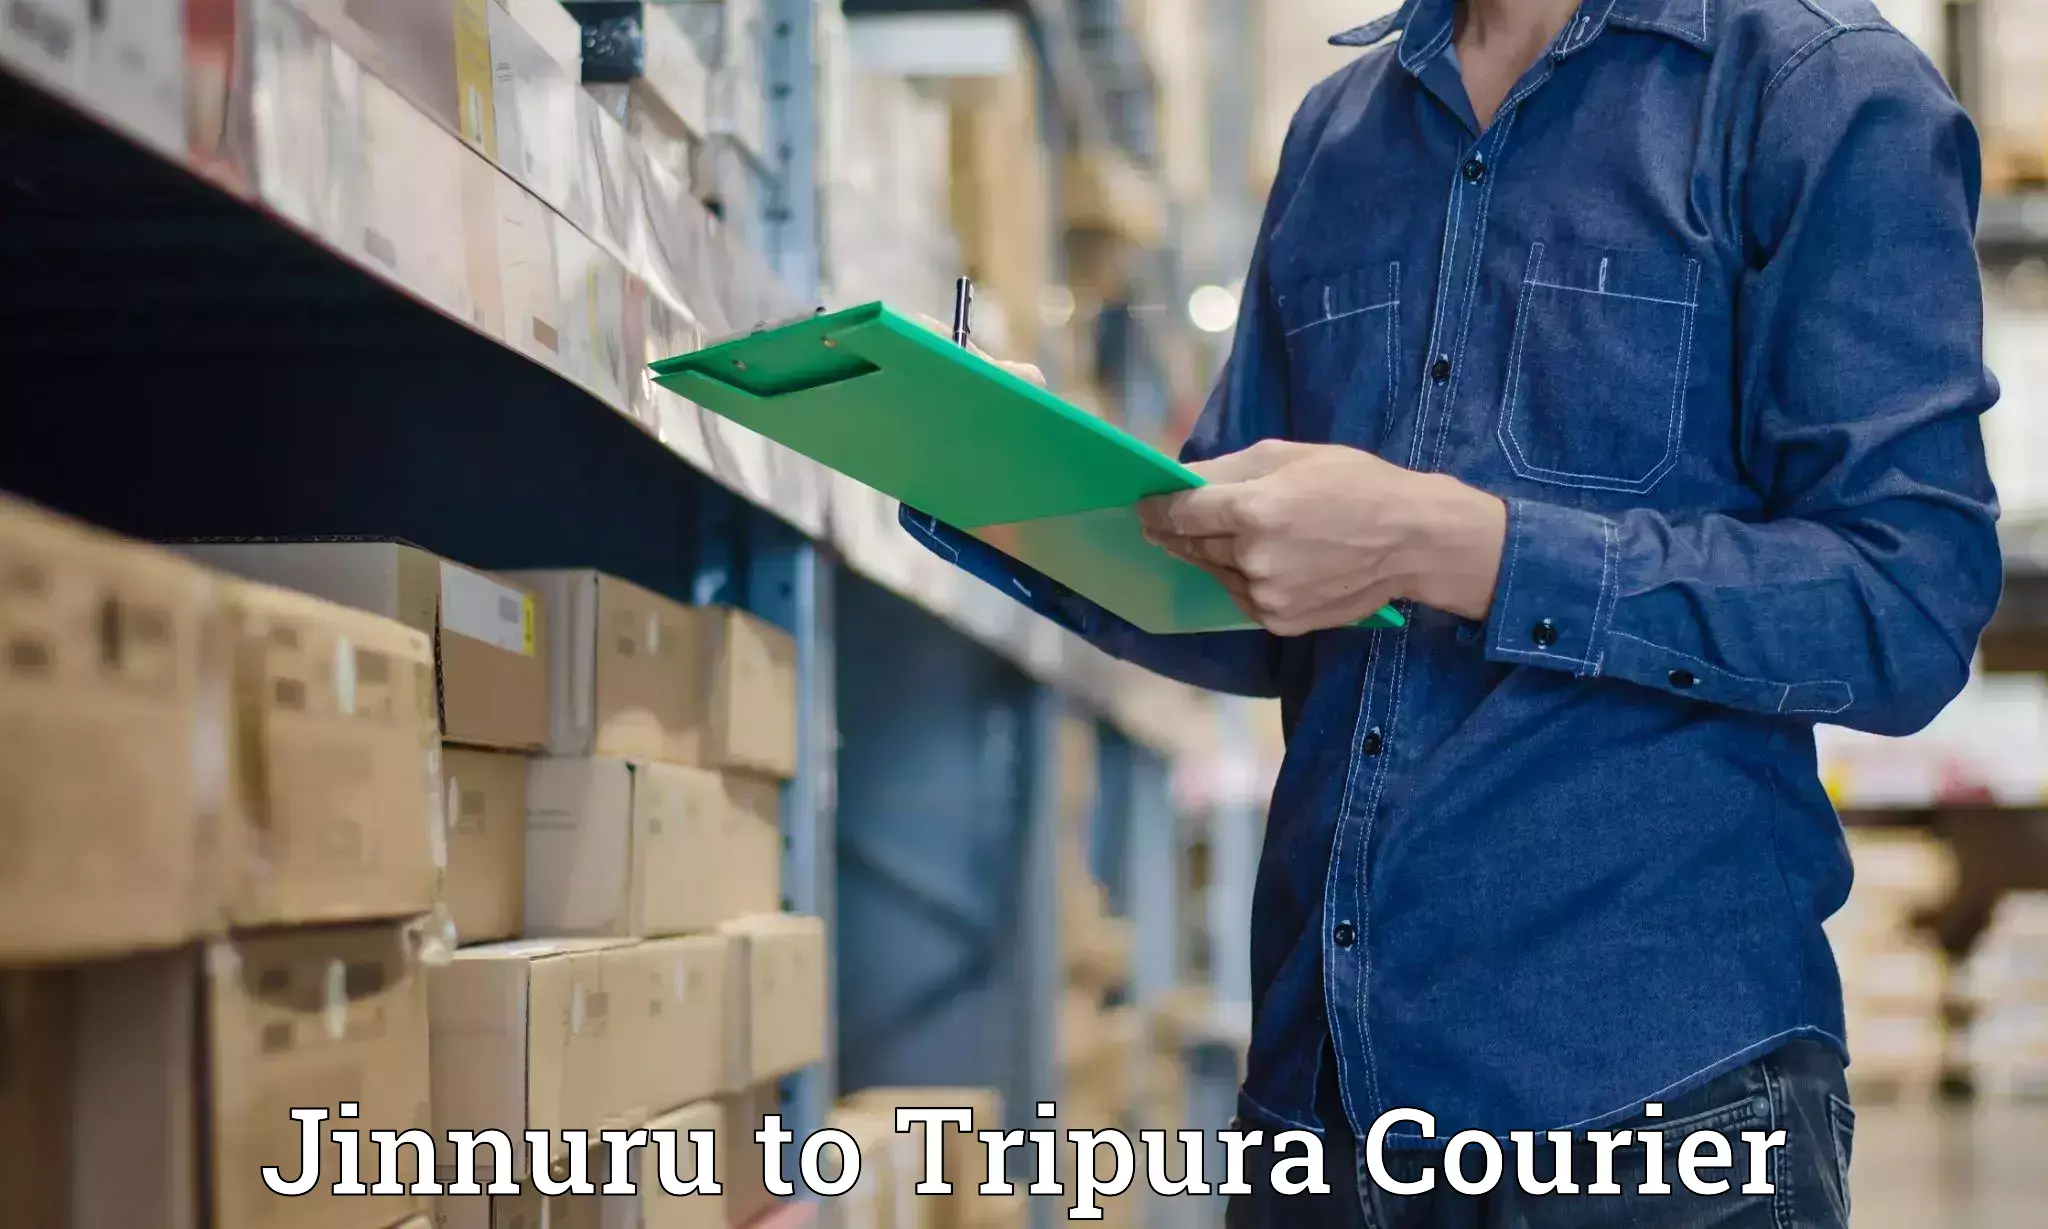 Courier service comparison Jinnuru to Amarpur